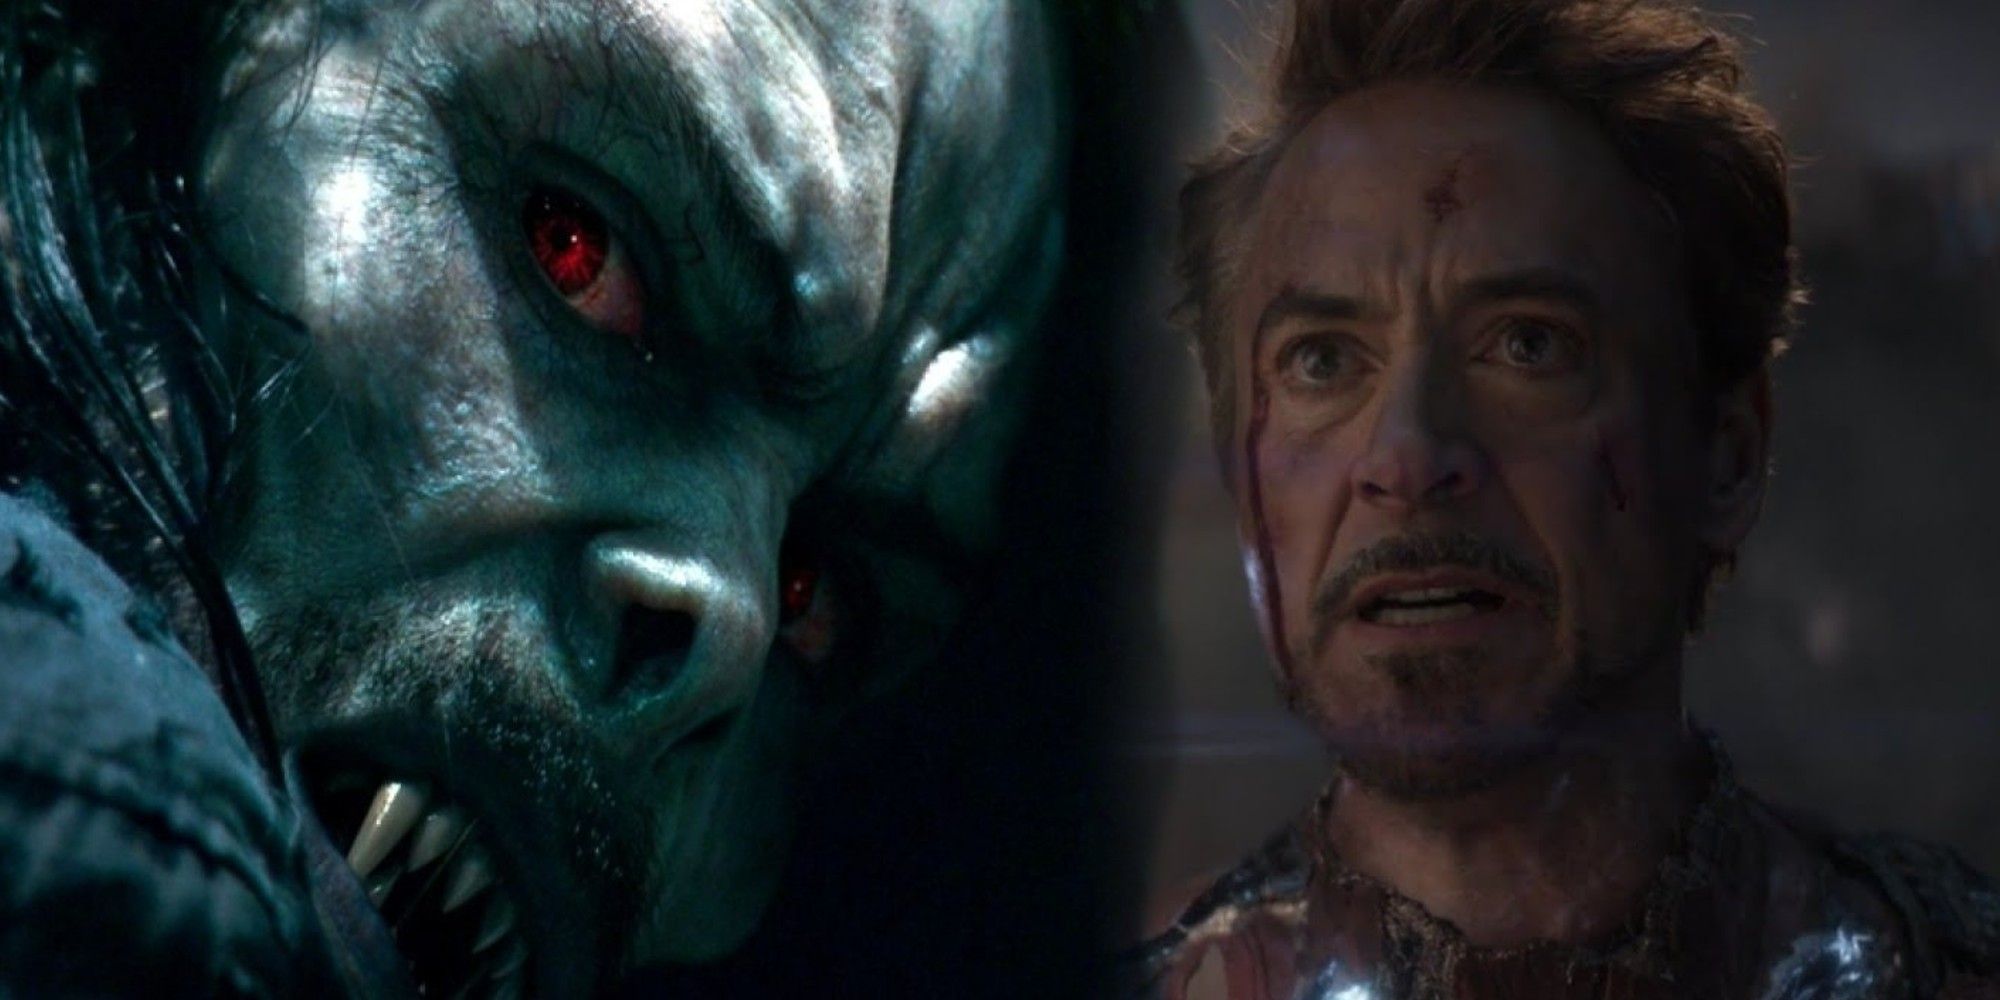 Morbius Jared Leto as Michael Morbius and Robert Downey Jr as Tony Stark Avengers Endgame Spoiler